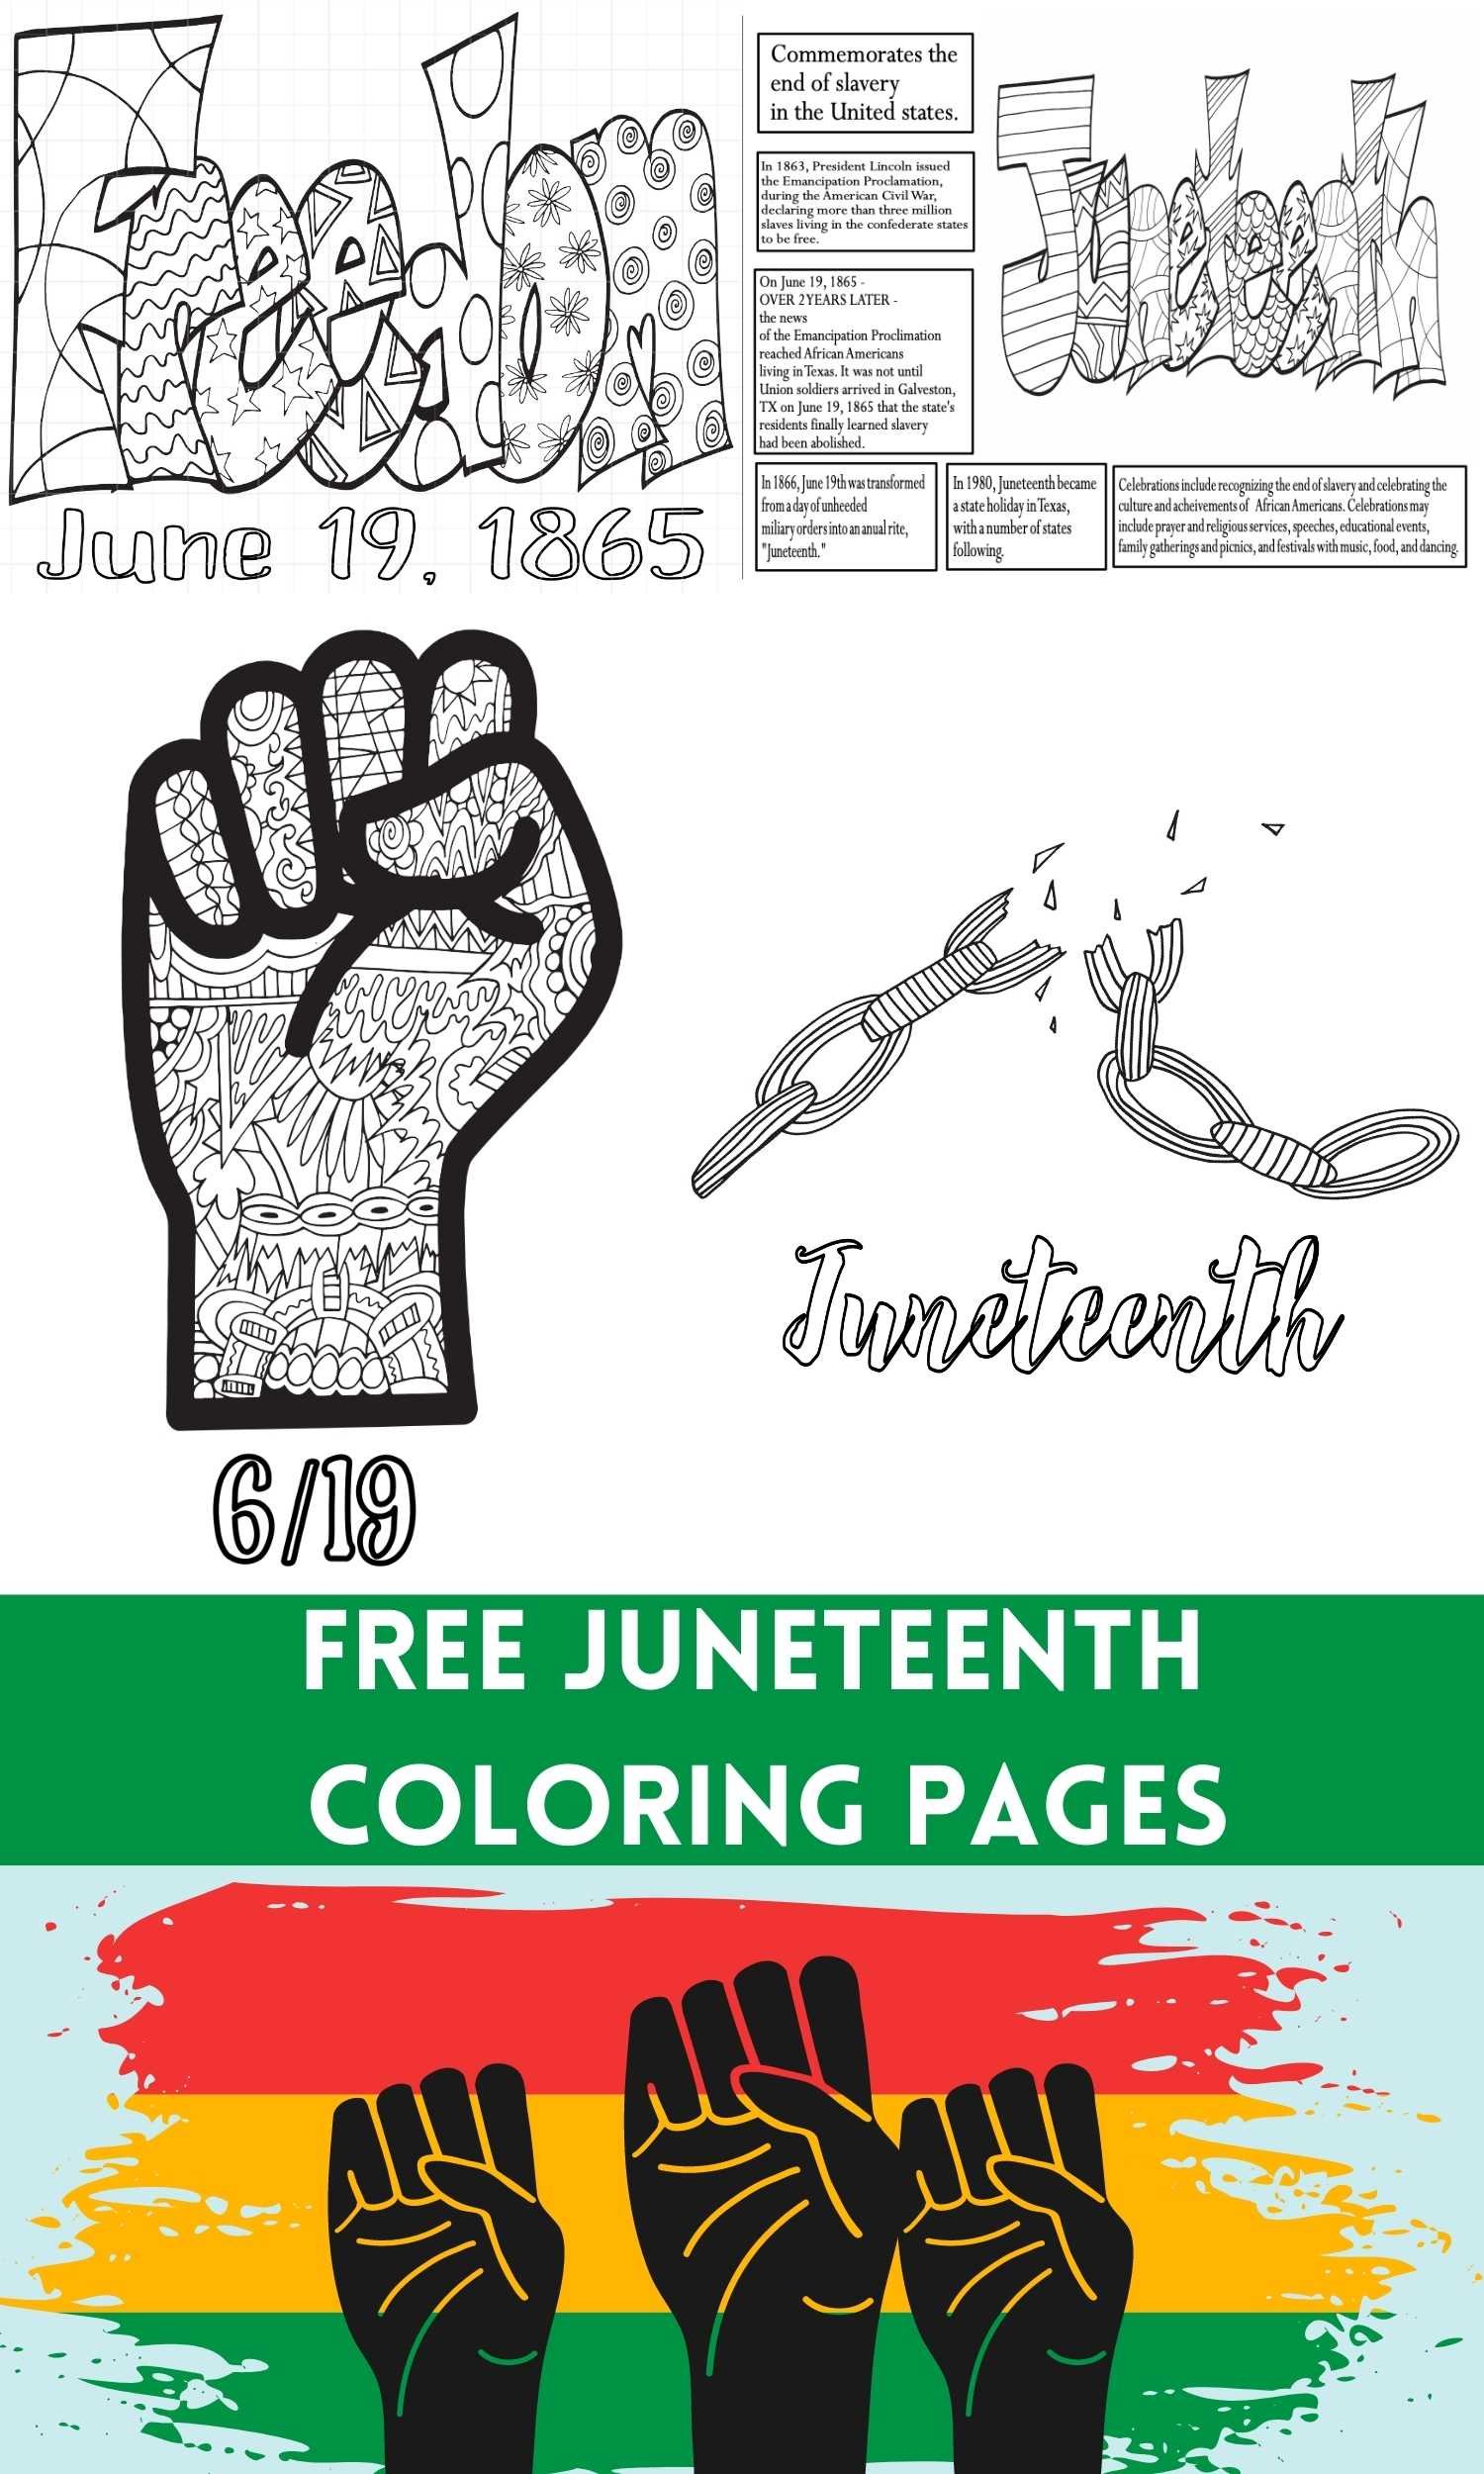 Free juneteenth coloring pages â stevie doodles